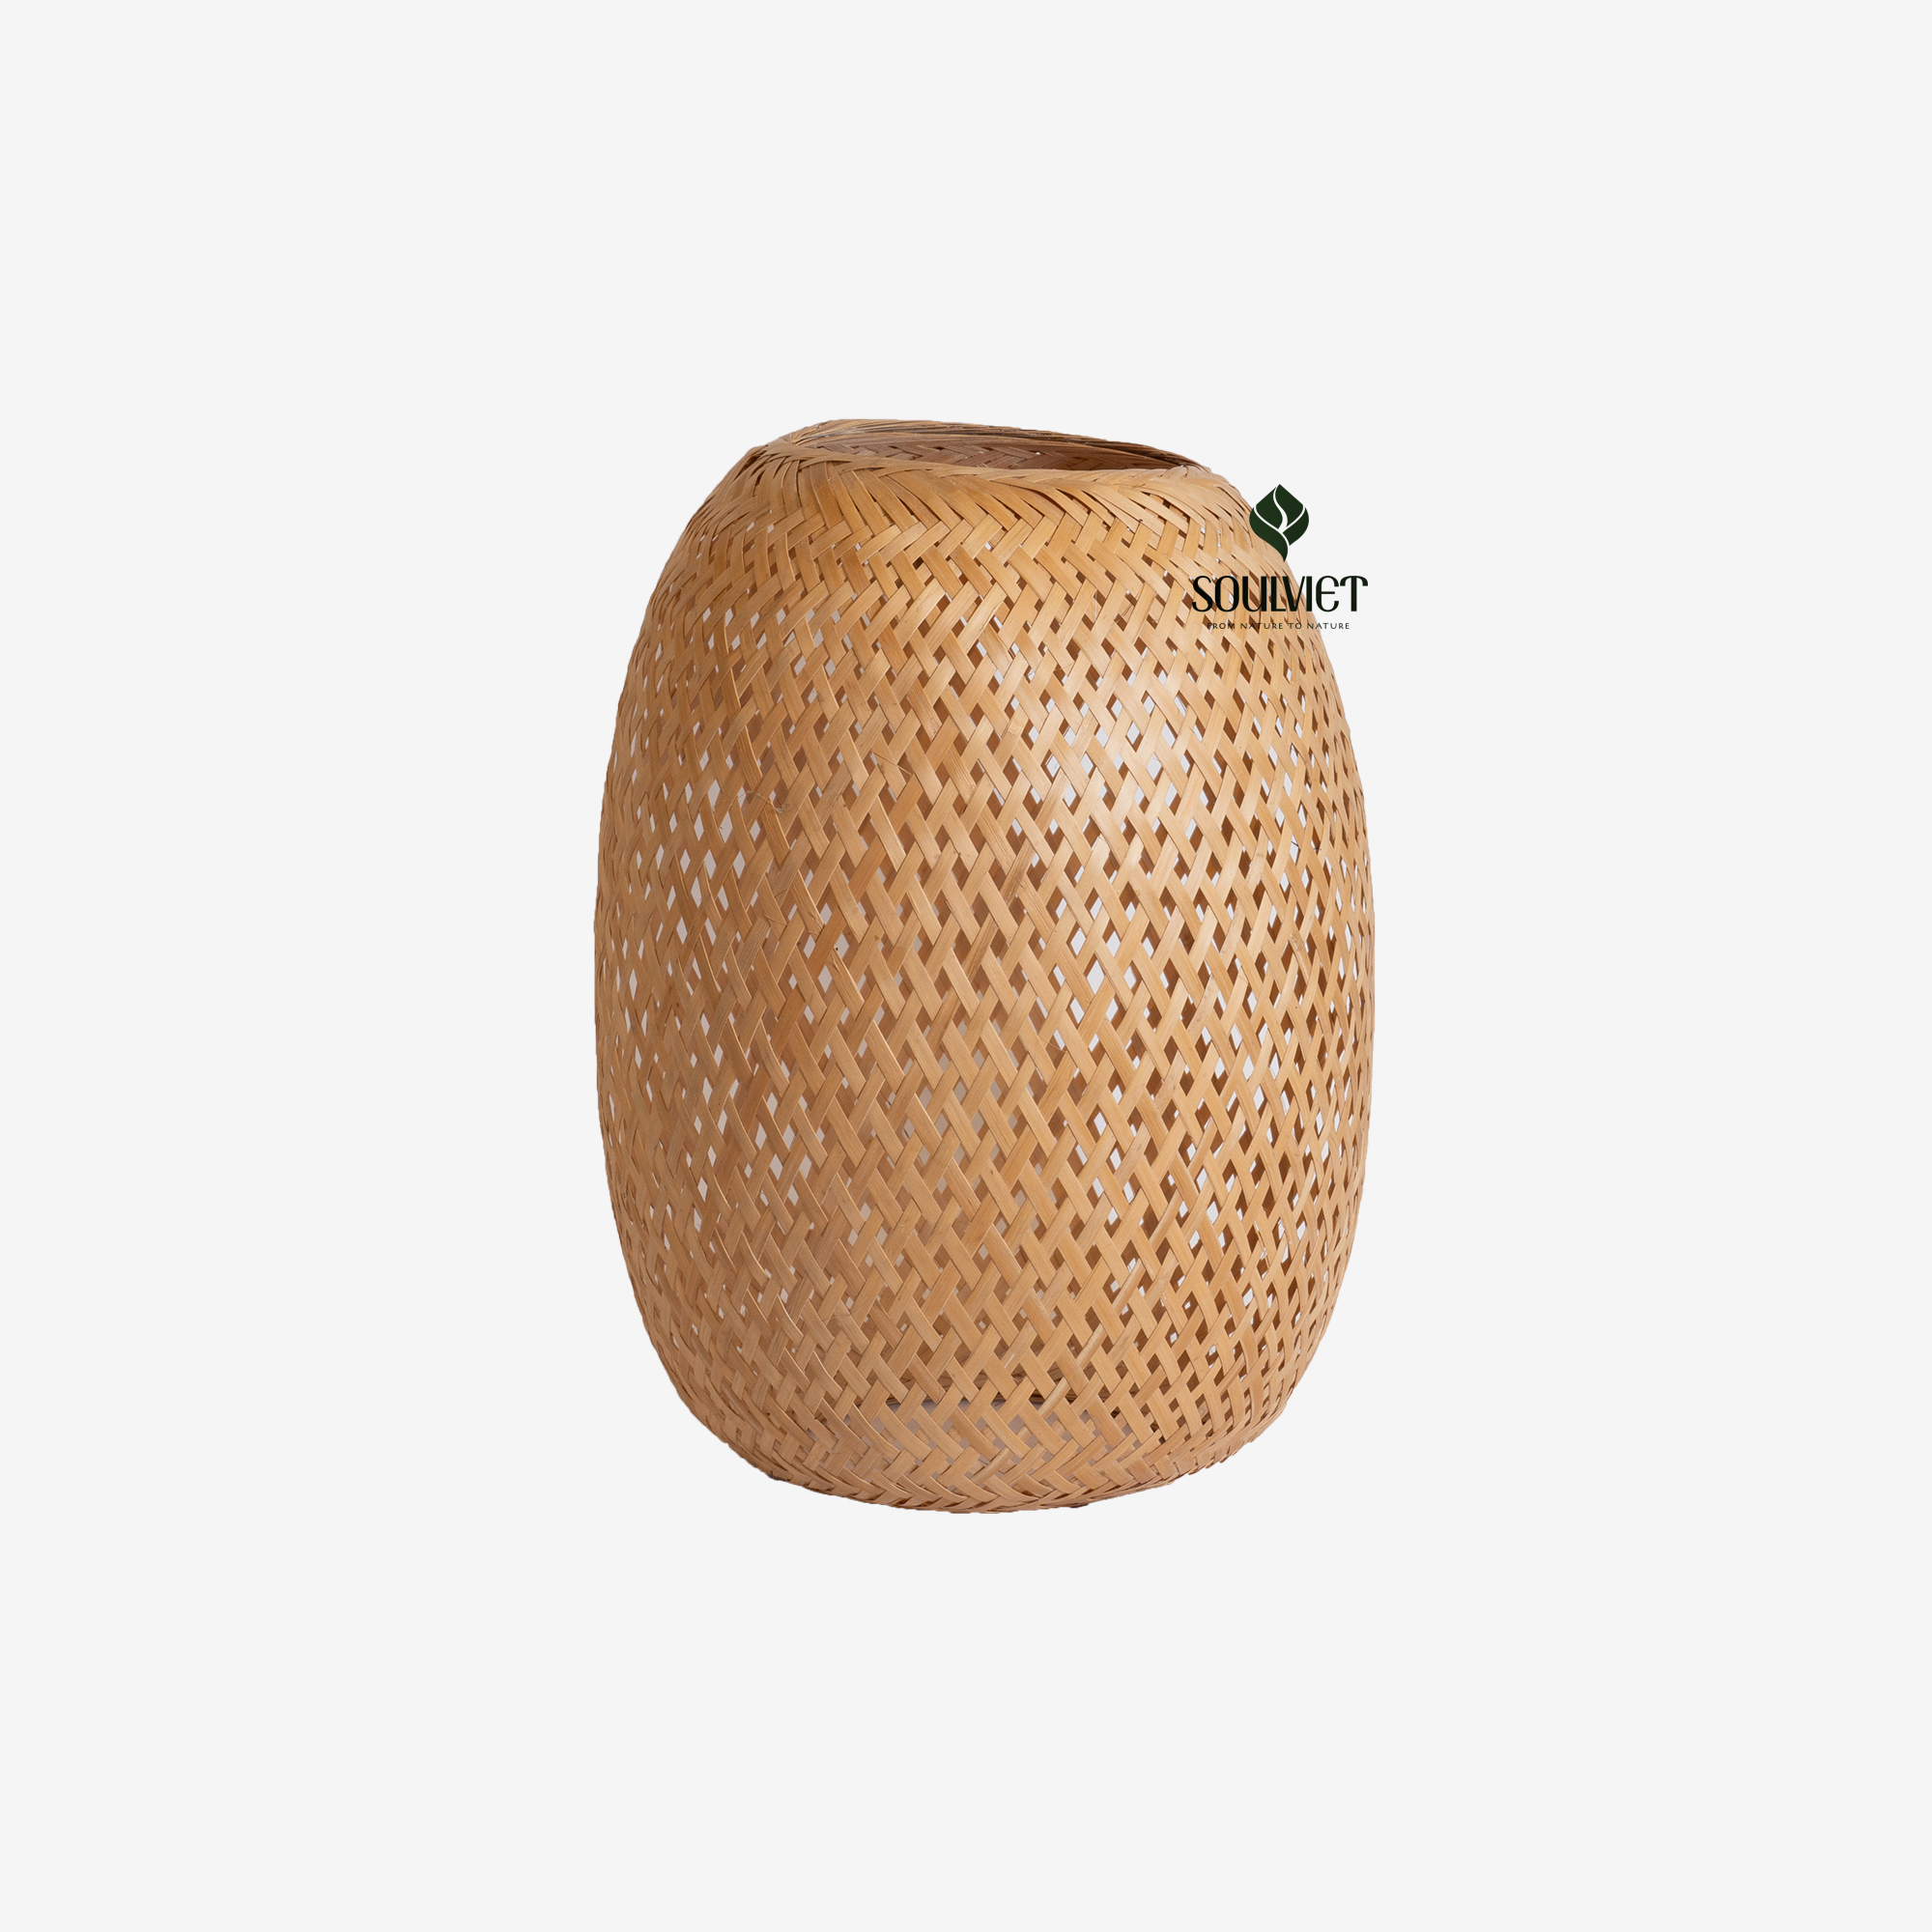 Bamboo Lantern